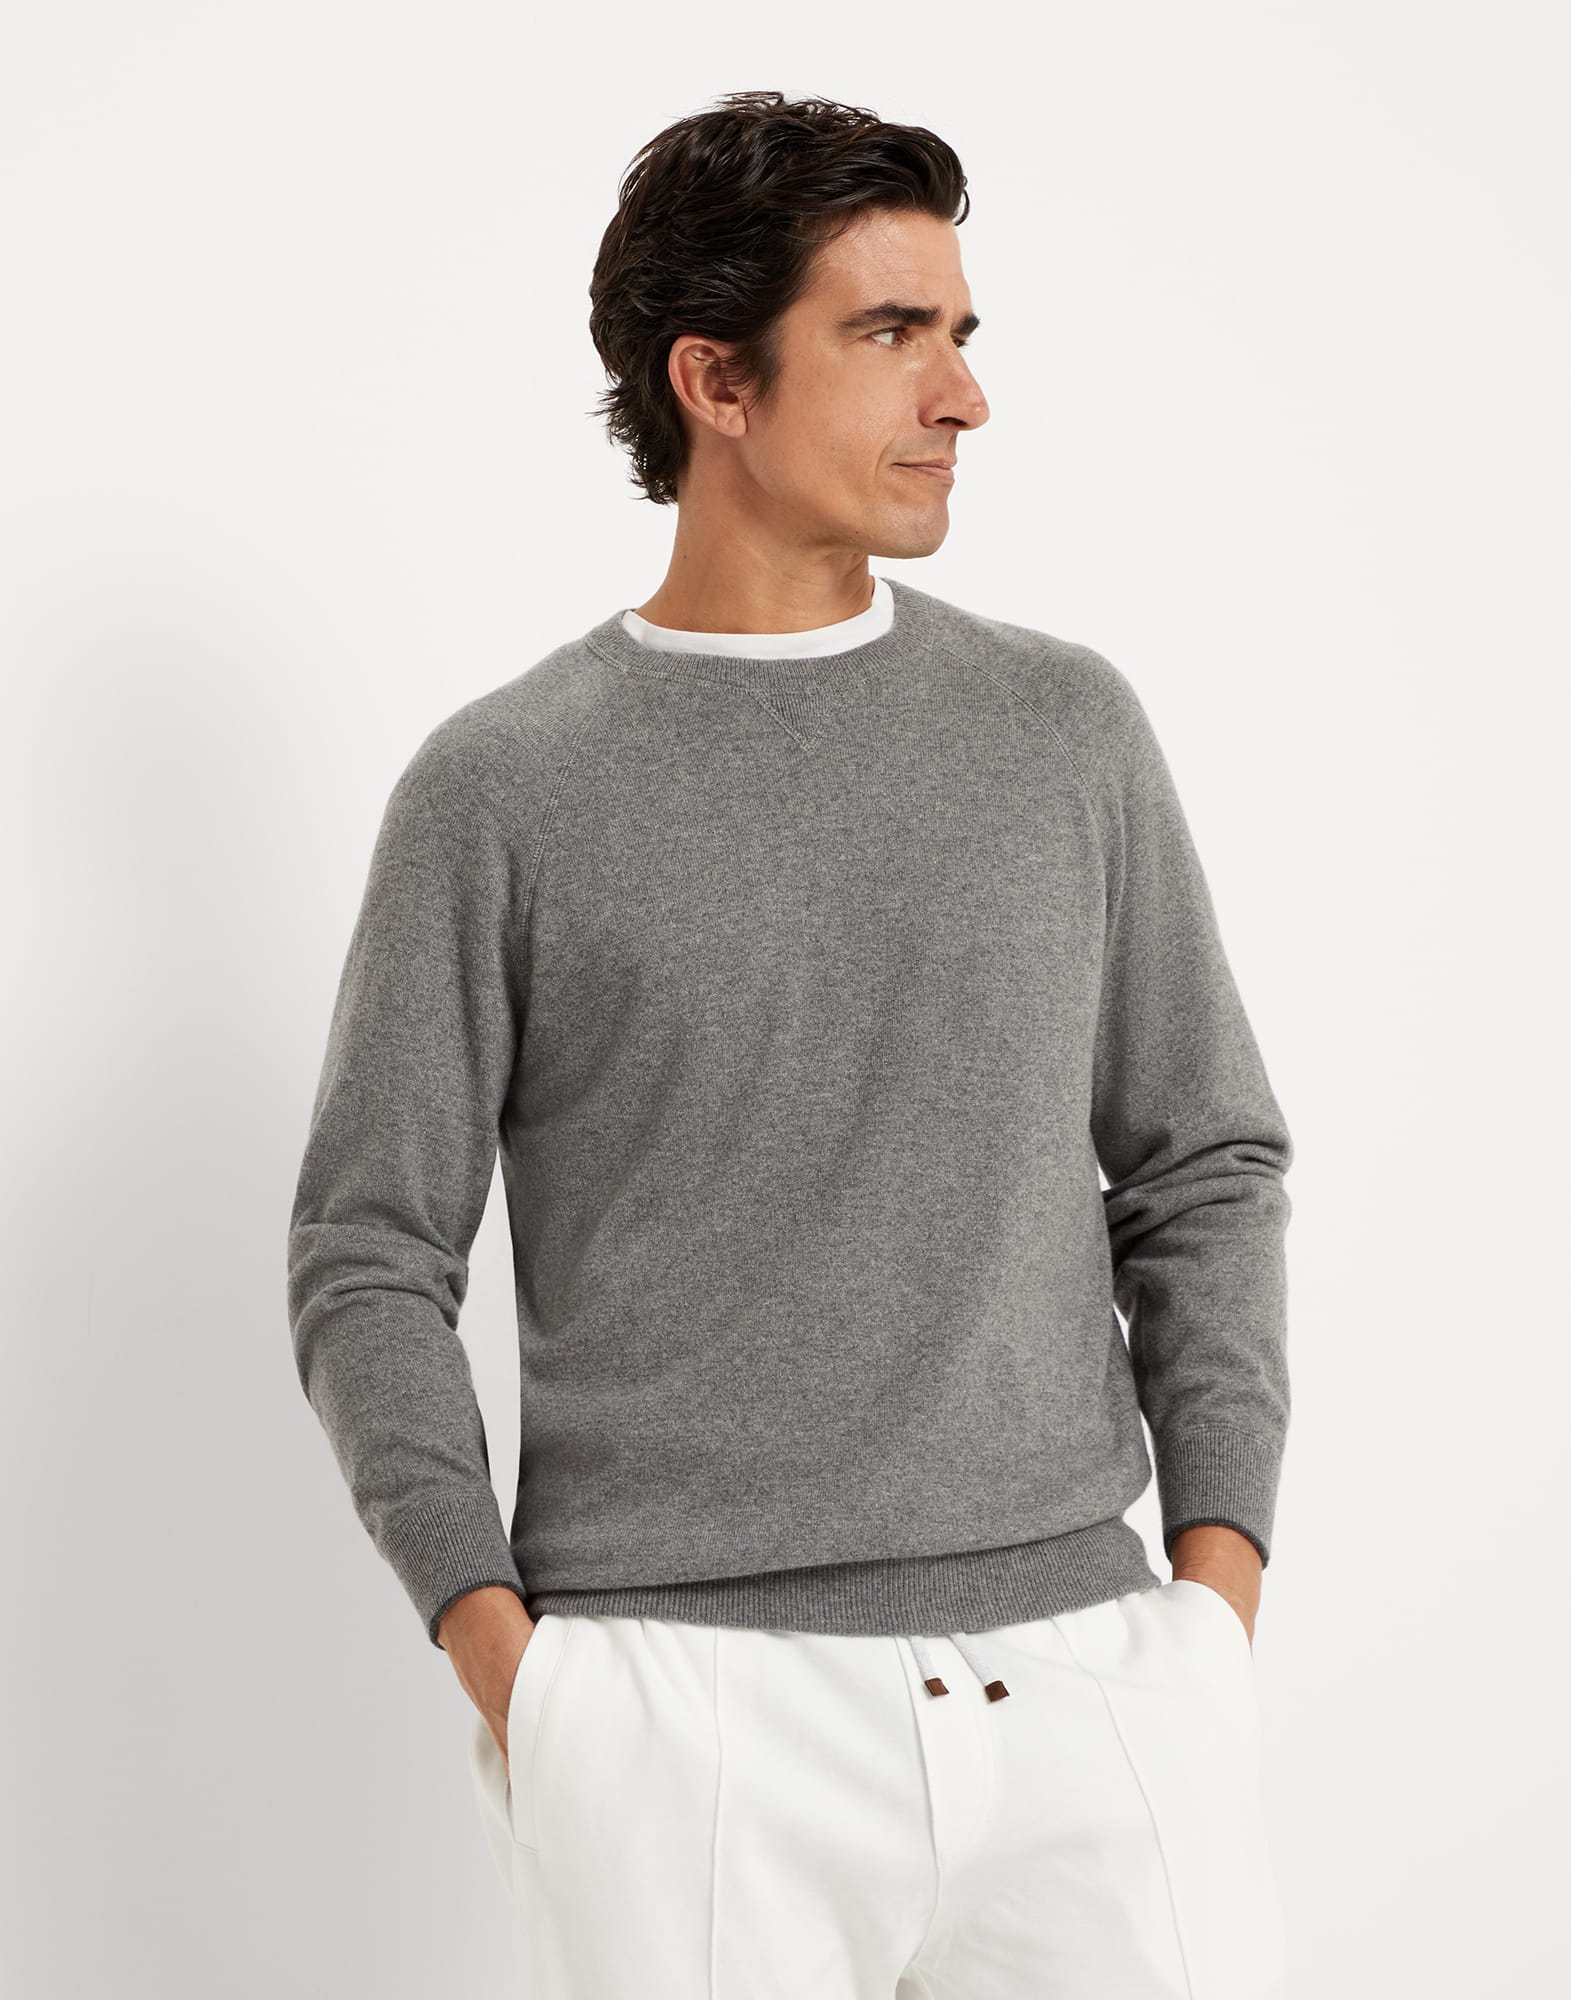 Sweatshirt-style sweater